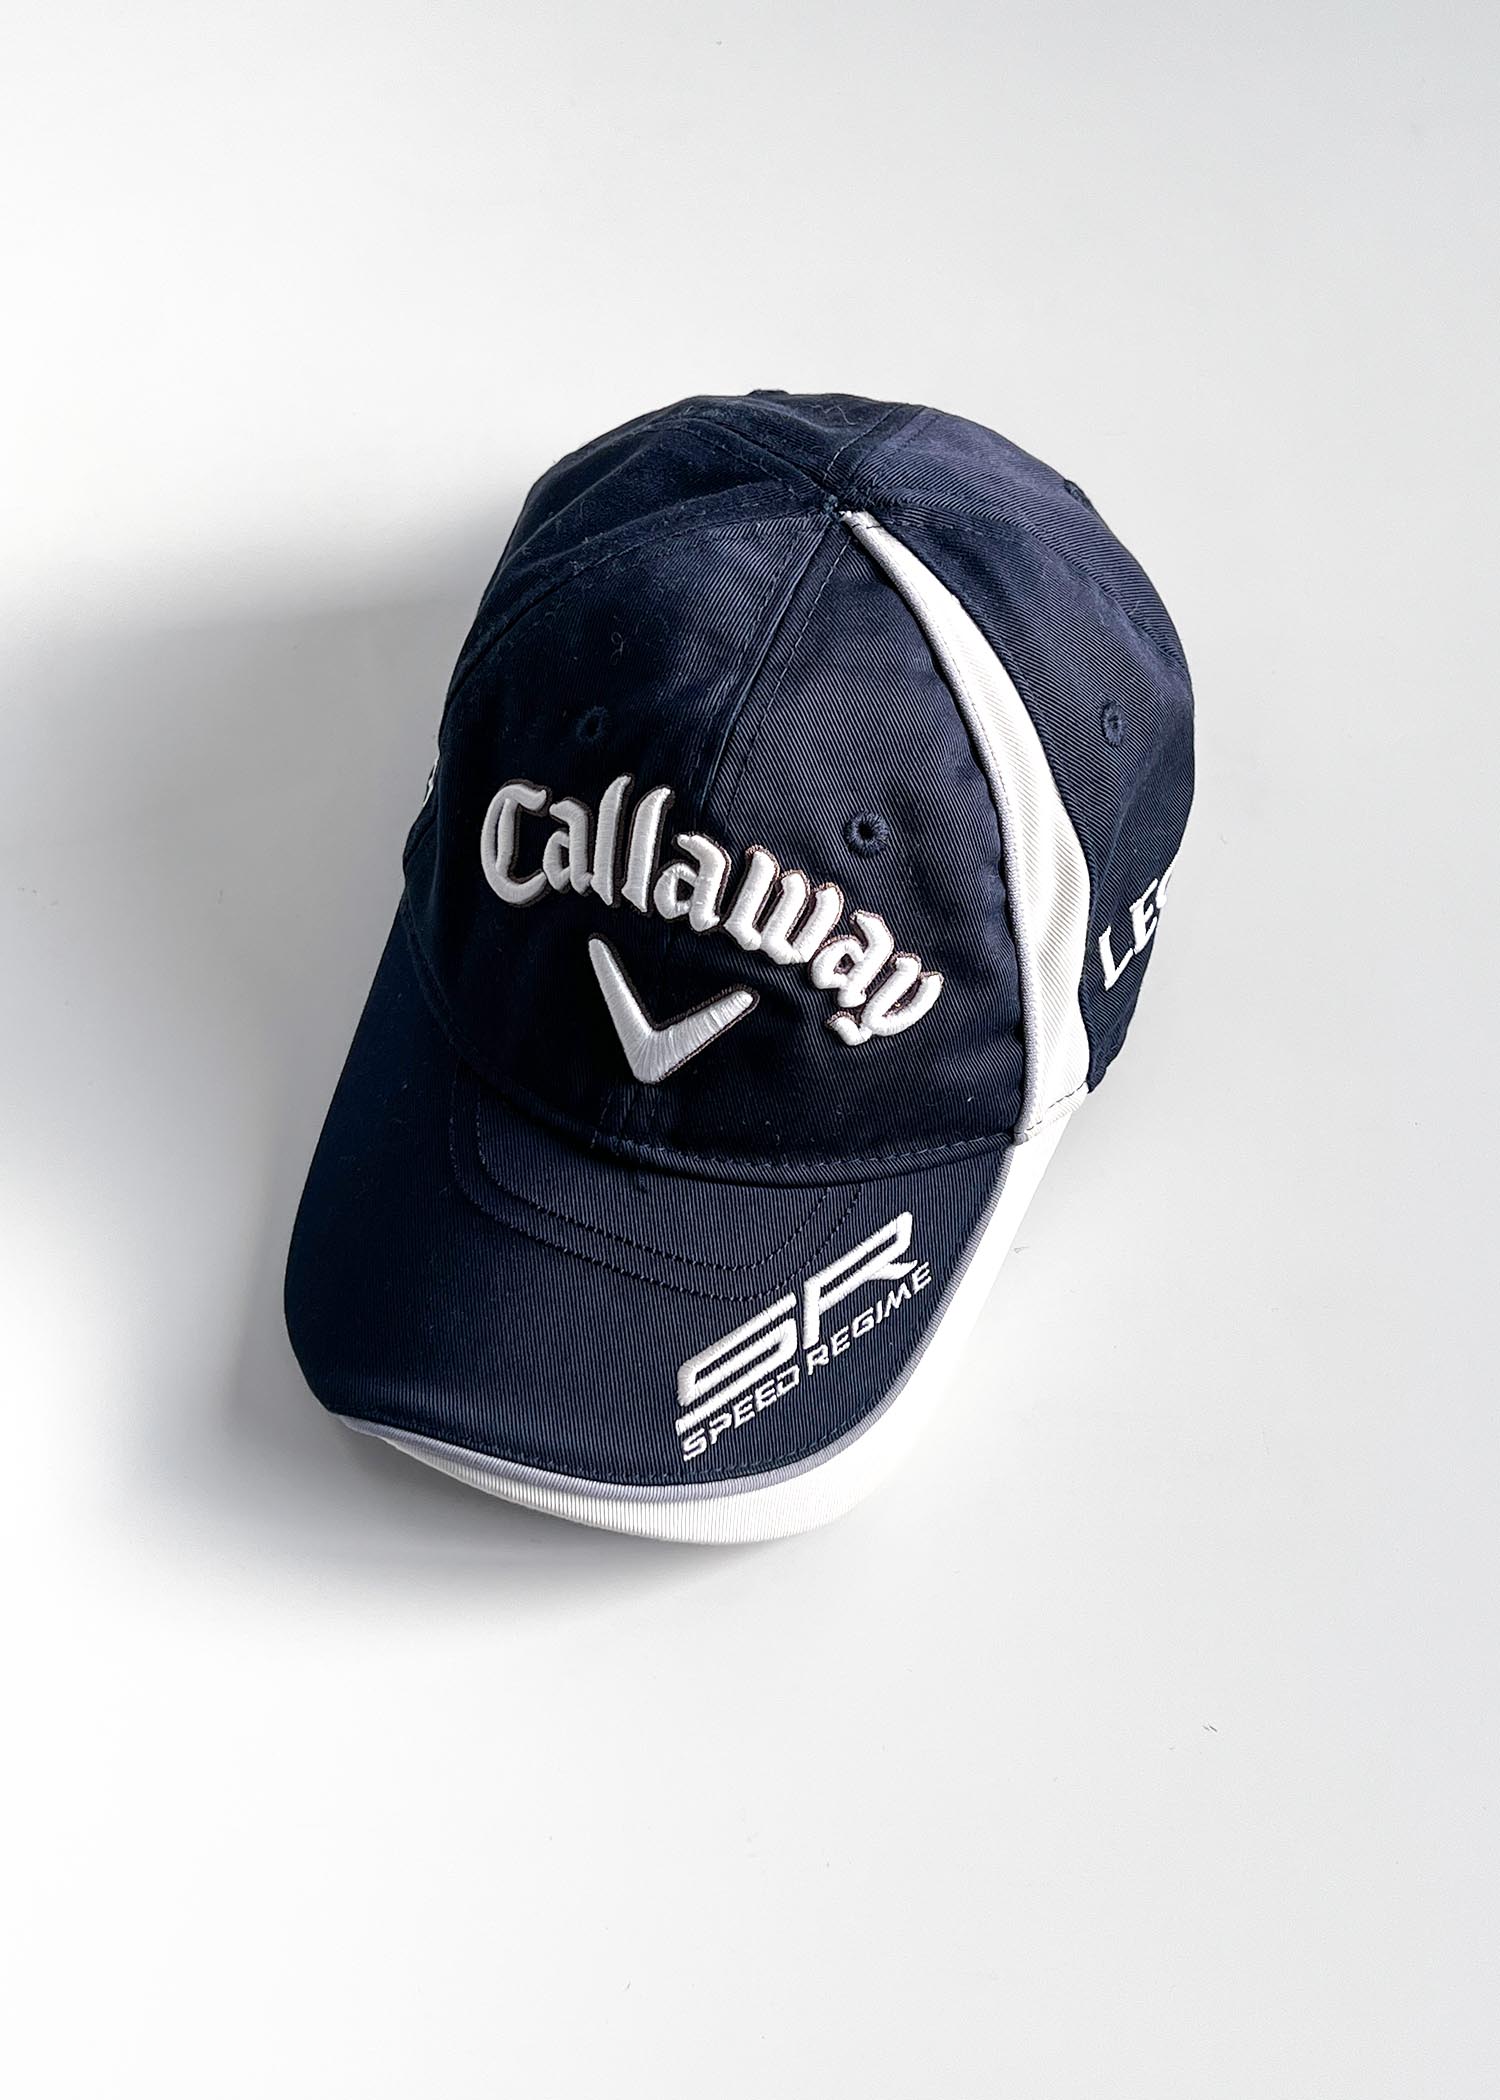 callaway racing cap